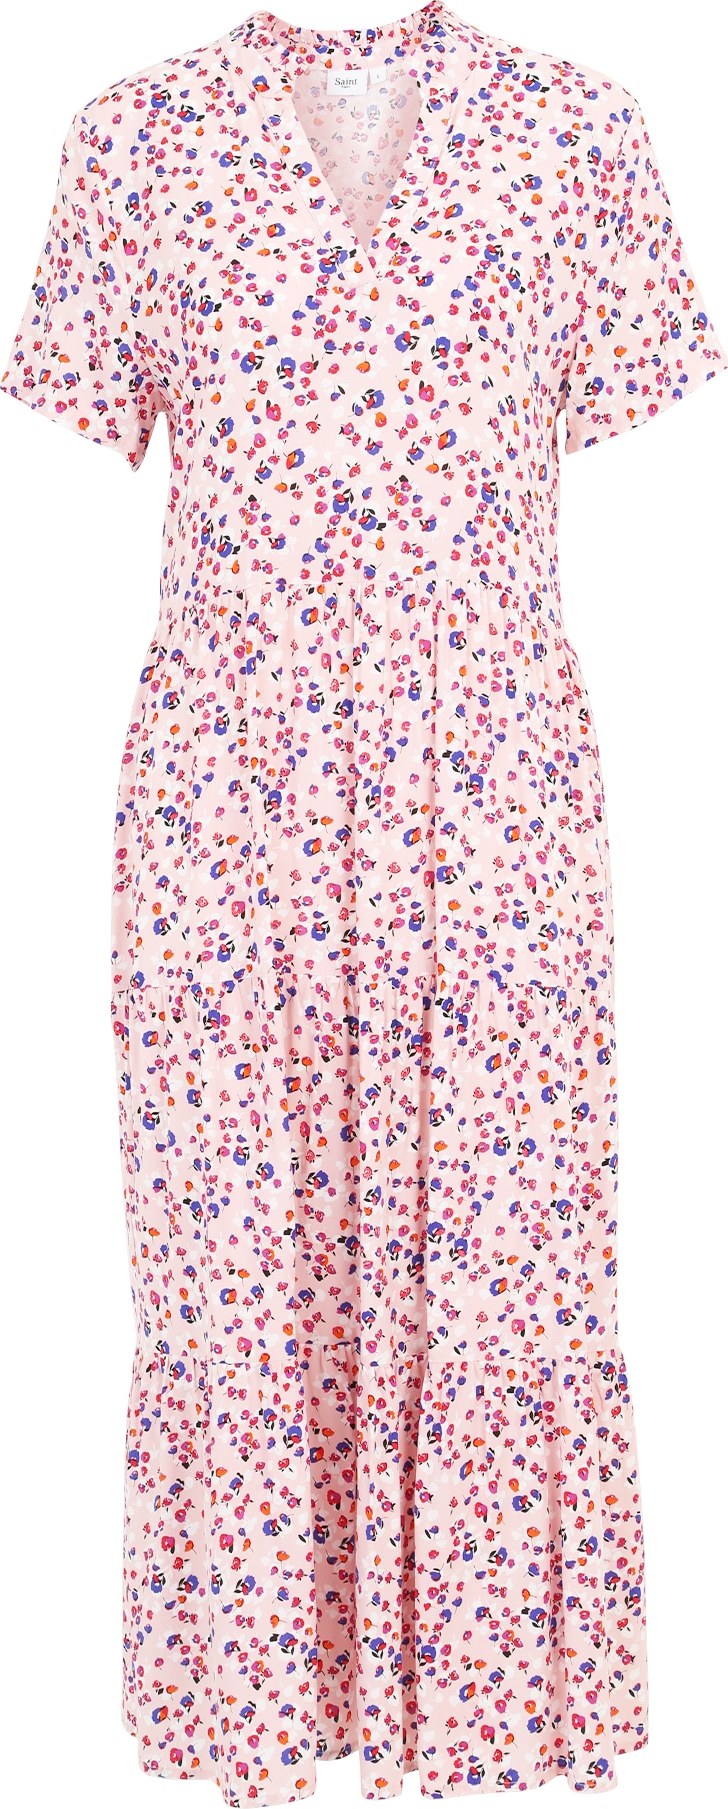 SAINT TROPEZ Letní šaty 'Eda' pink / mix barev